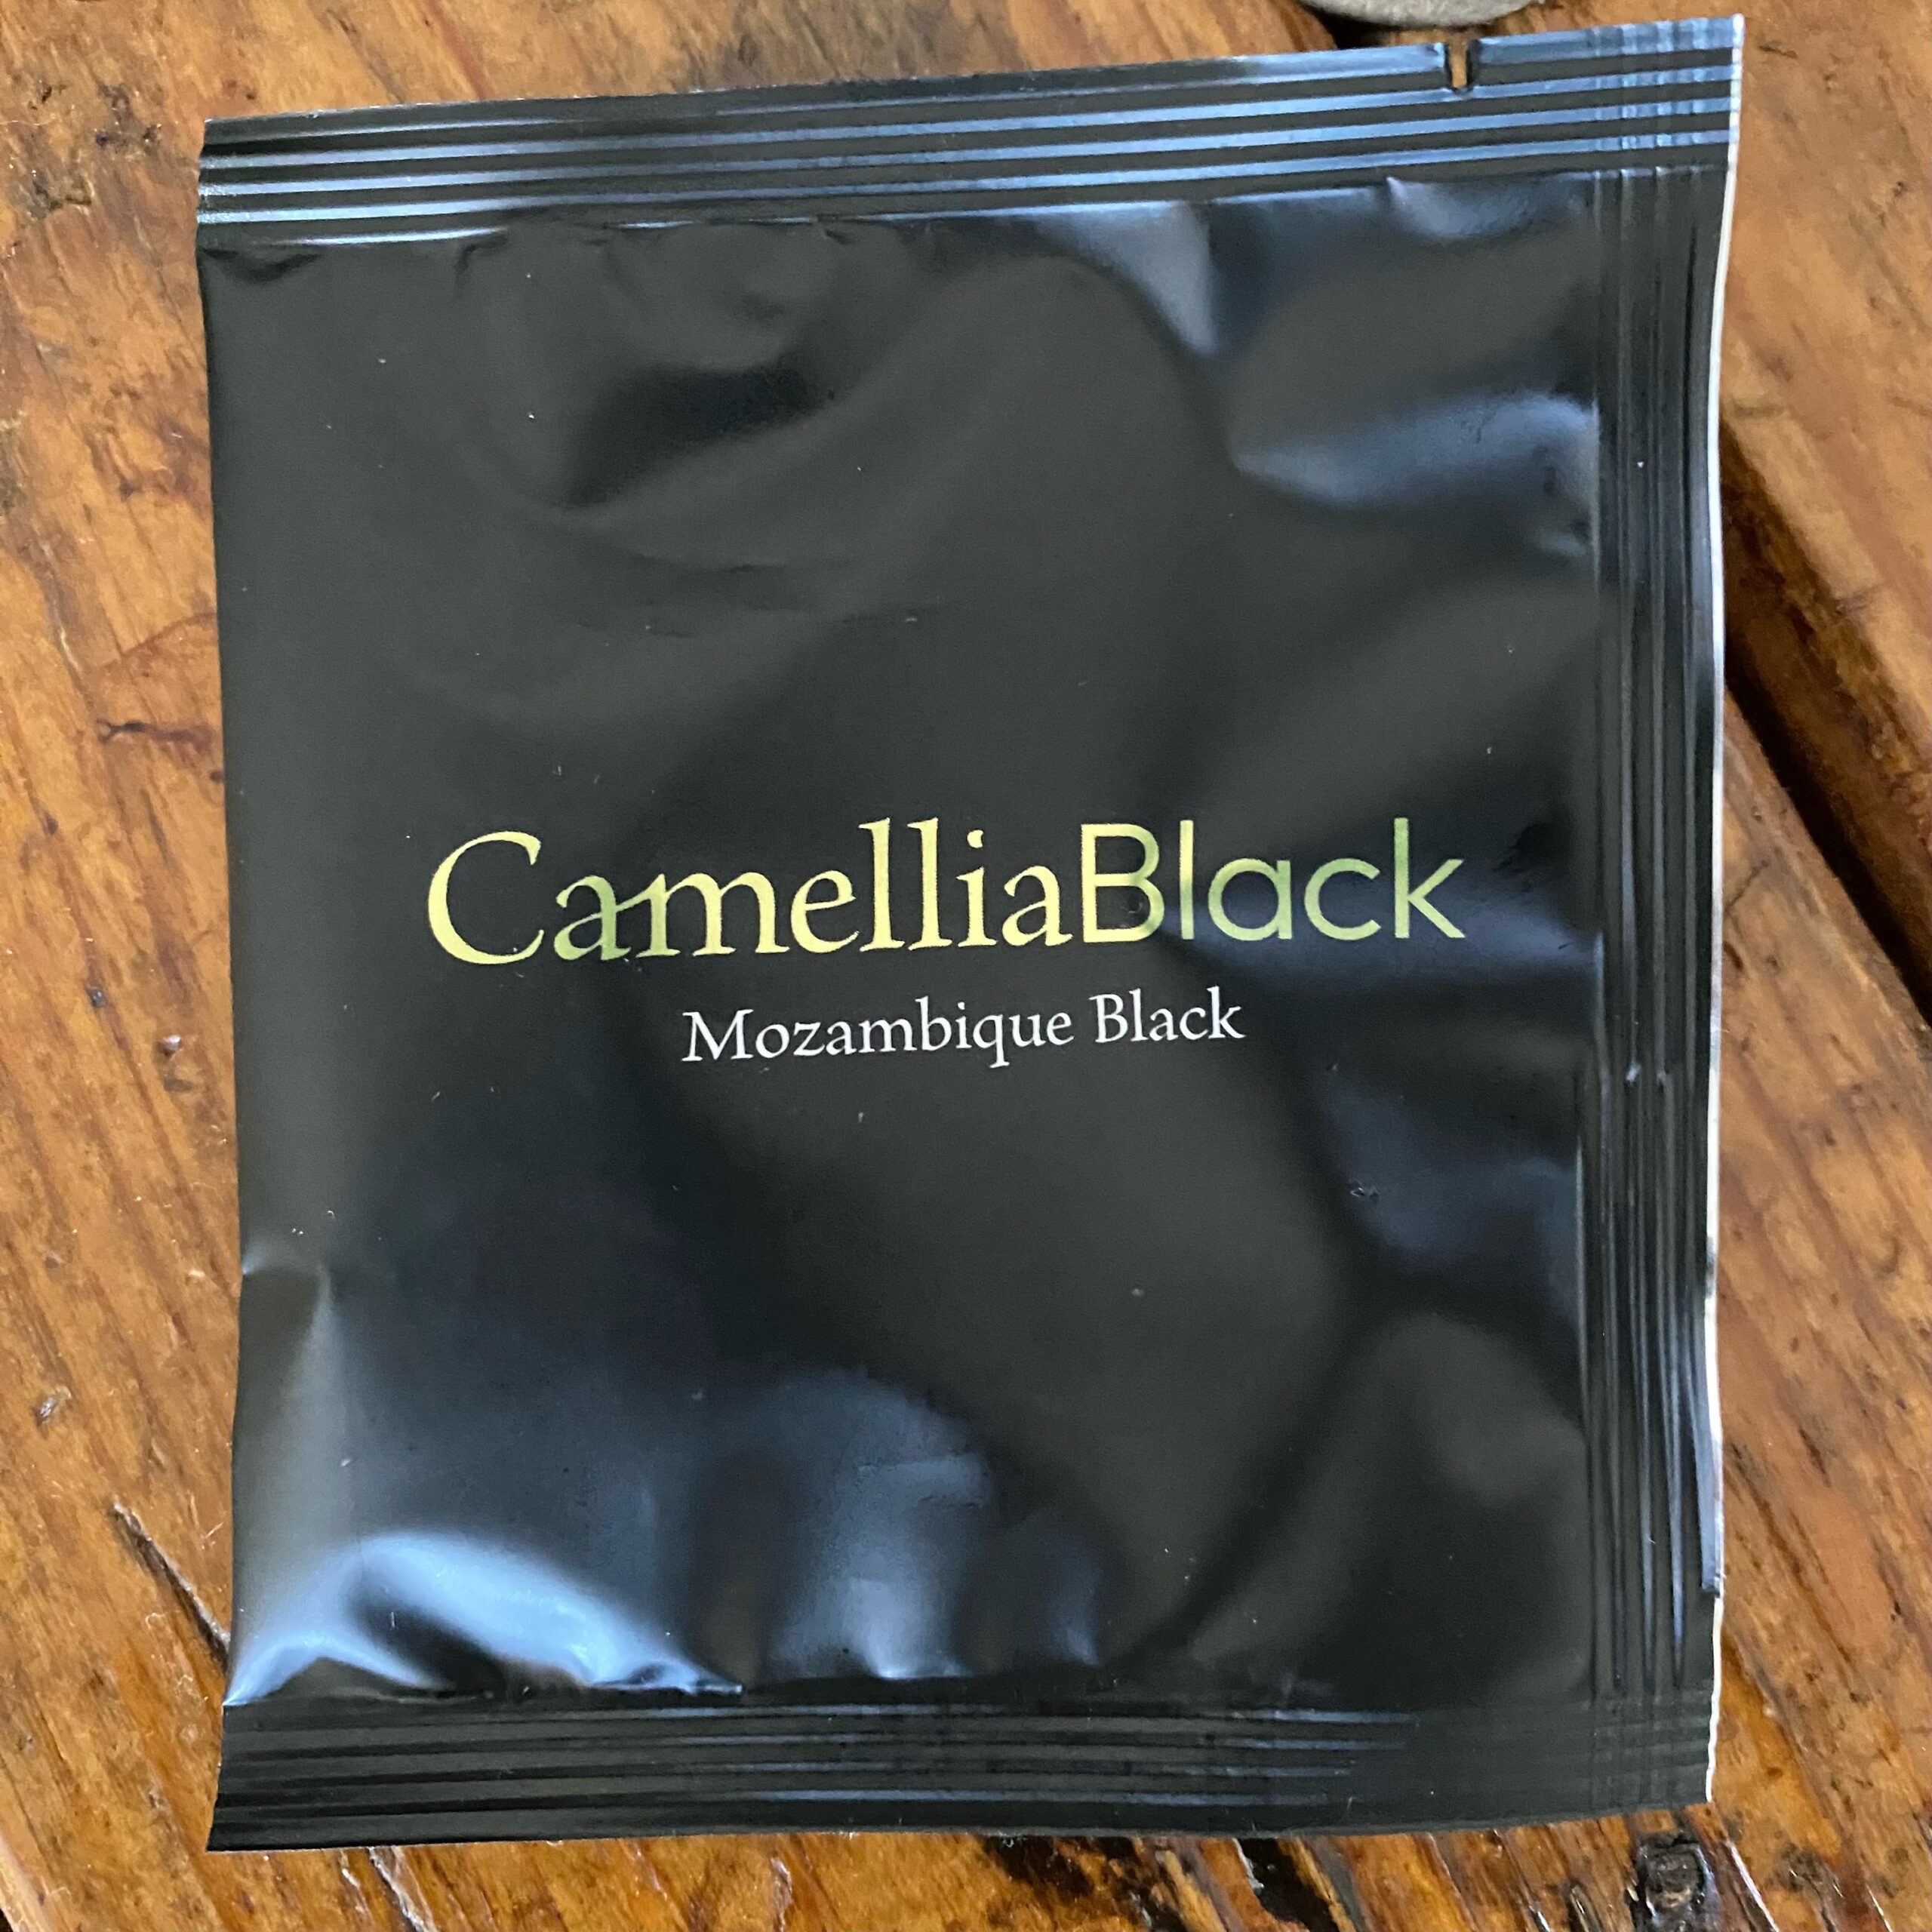 CamelliaBlack tea - Authentic African Teas